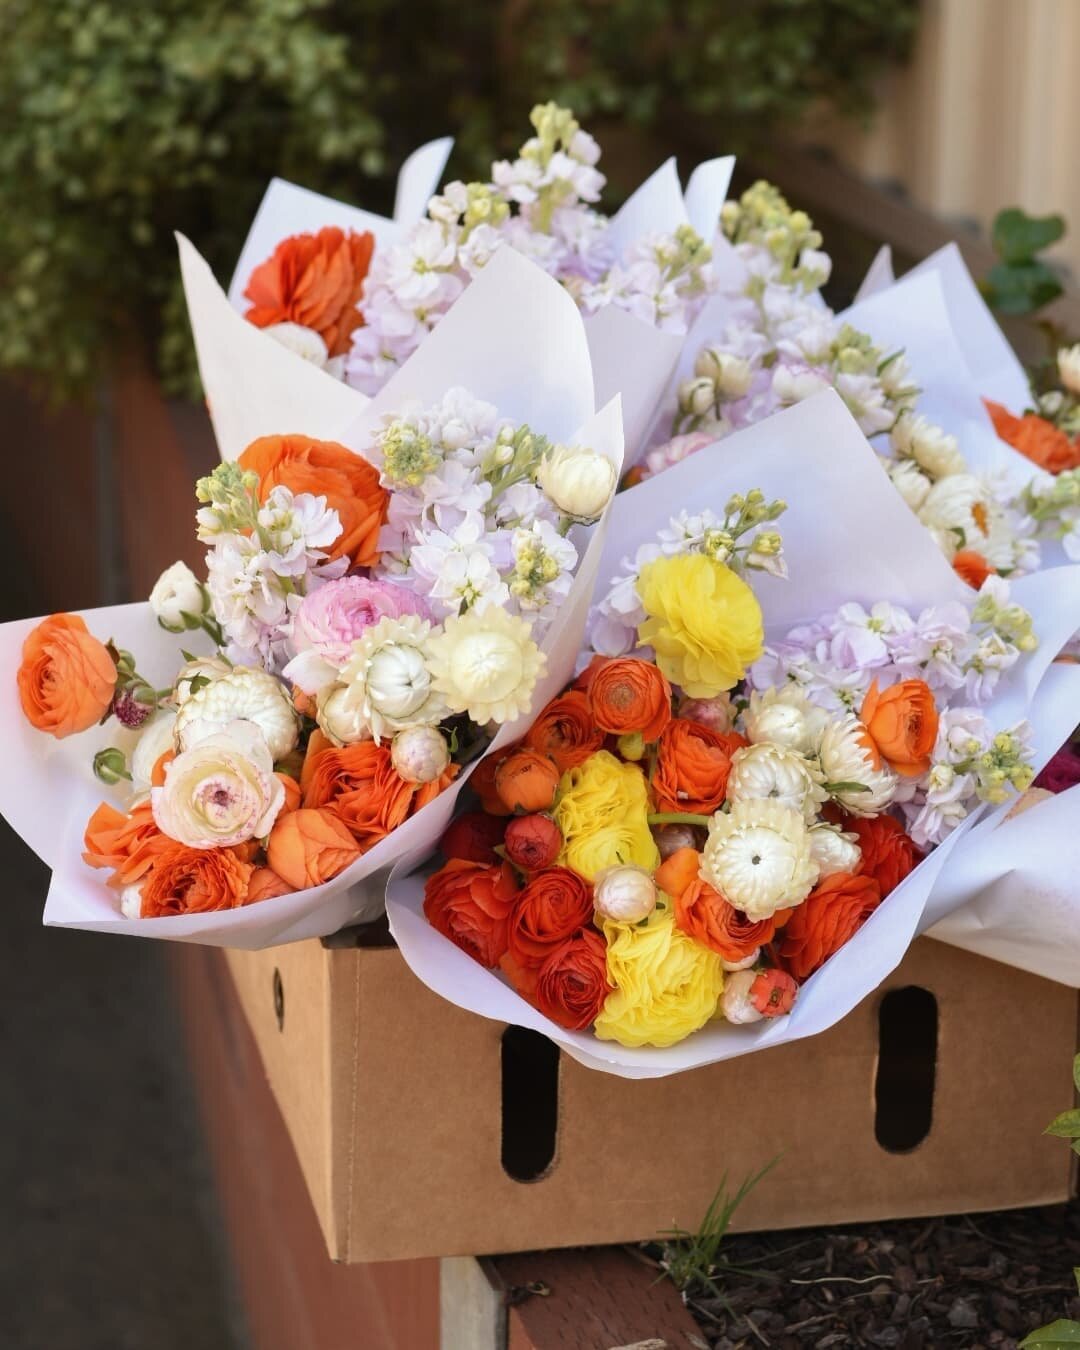 Love ranunculus season ❤🧡💛⠀
⠀
⠀
⠀
#ranuncs #freetofeedmelbourne #orange #springflowers #florallove #flowerpower #bunchesofjoy #melbourneflorist